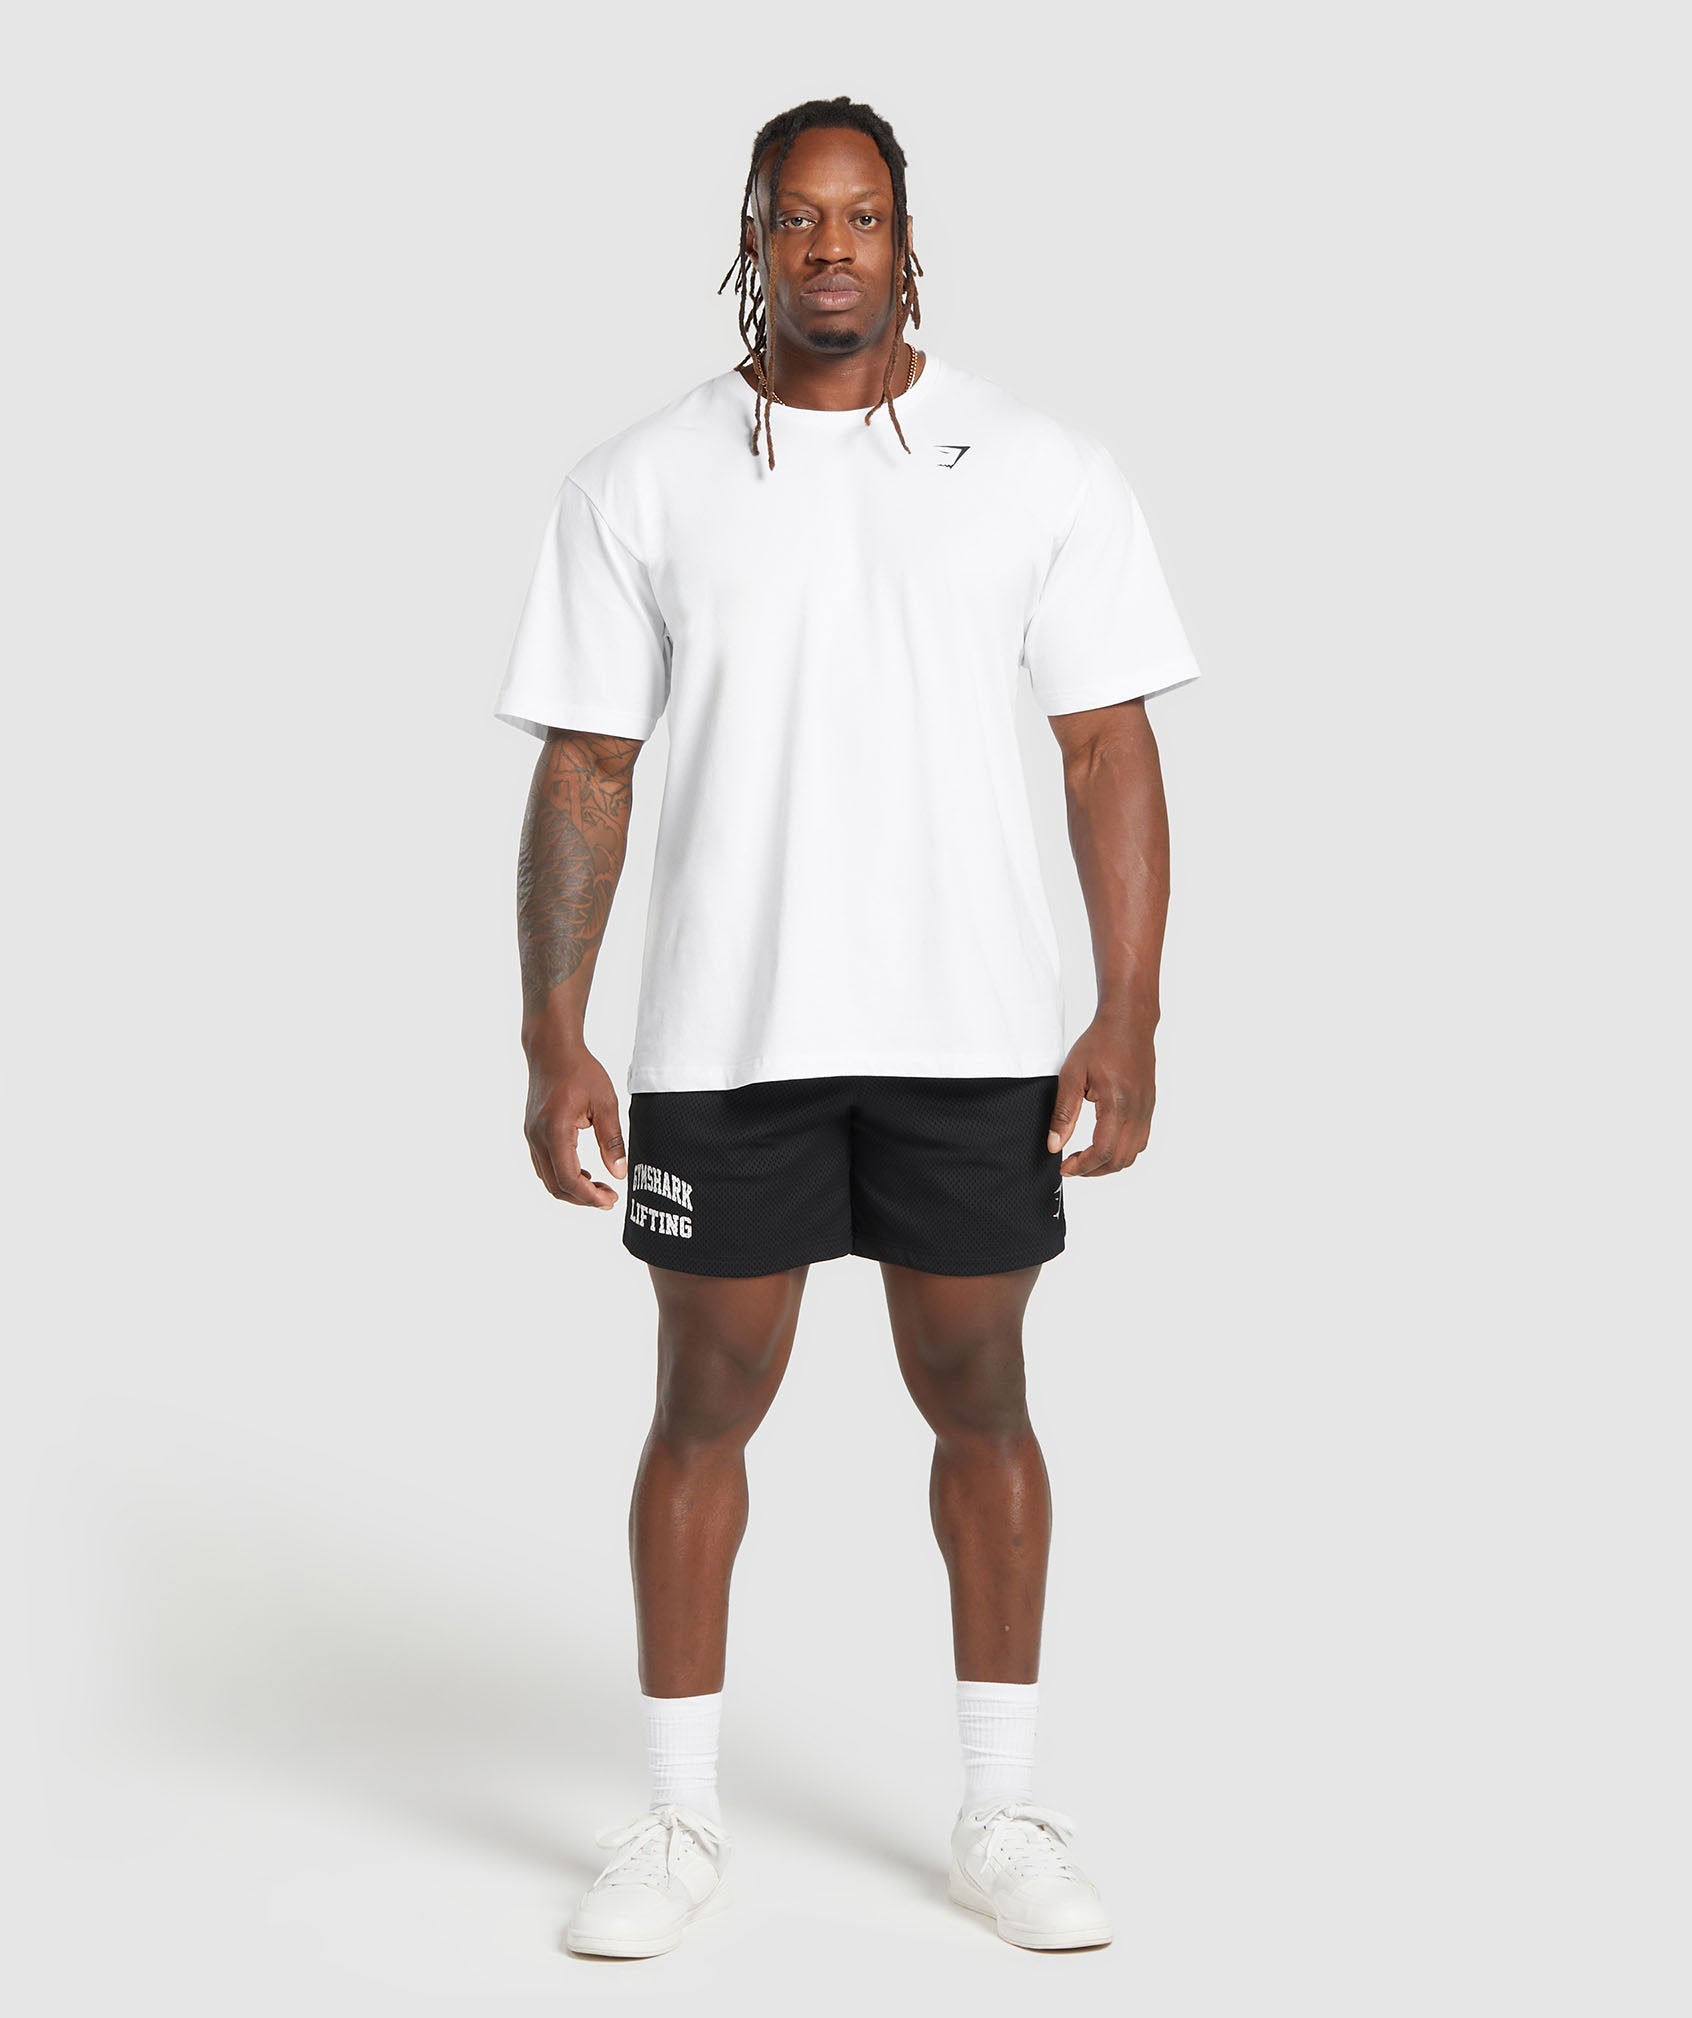 Lifting Mesh 7" Shorts in Black - view 4